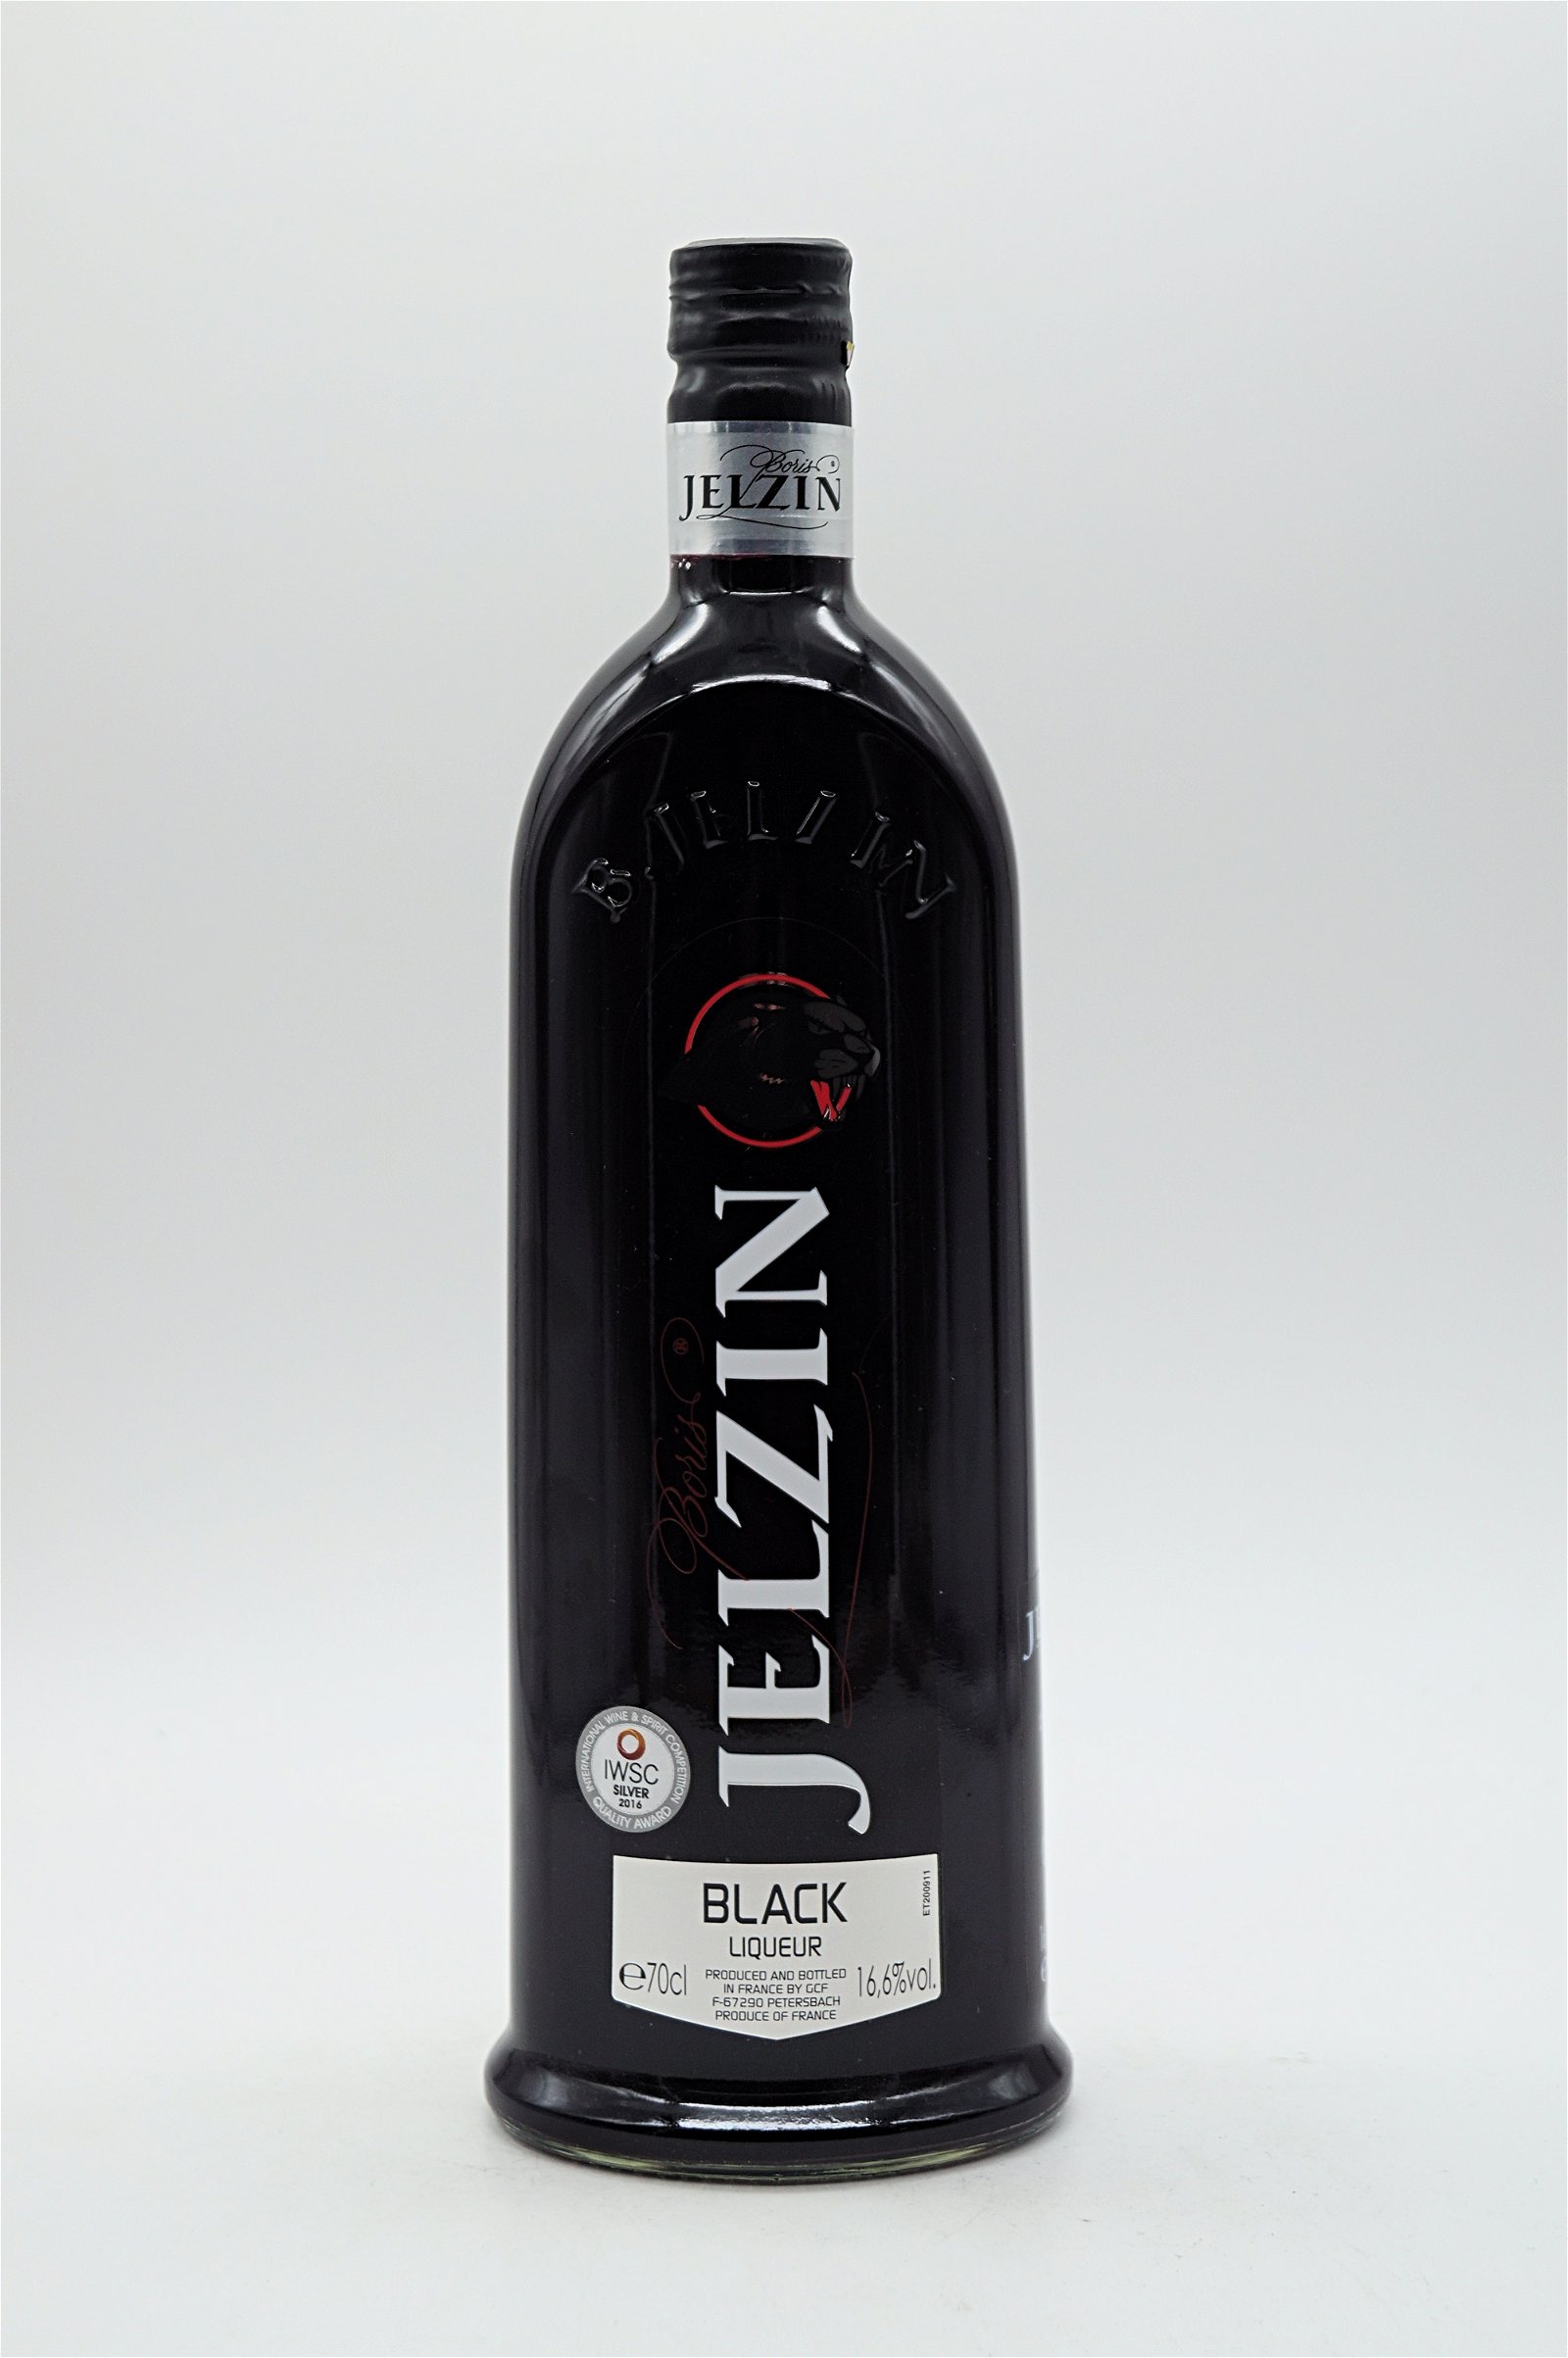 Jelzin Black Liqueur